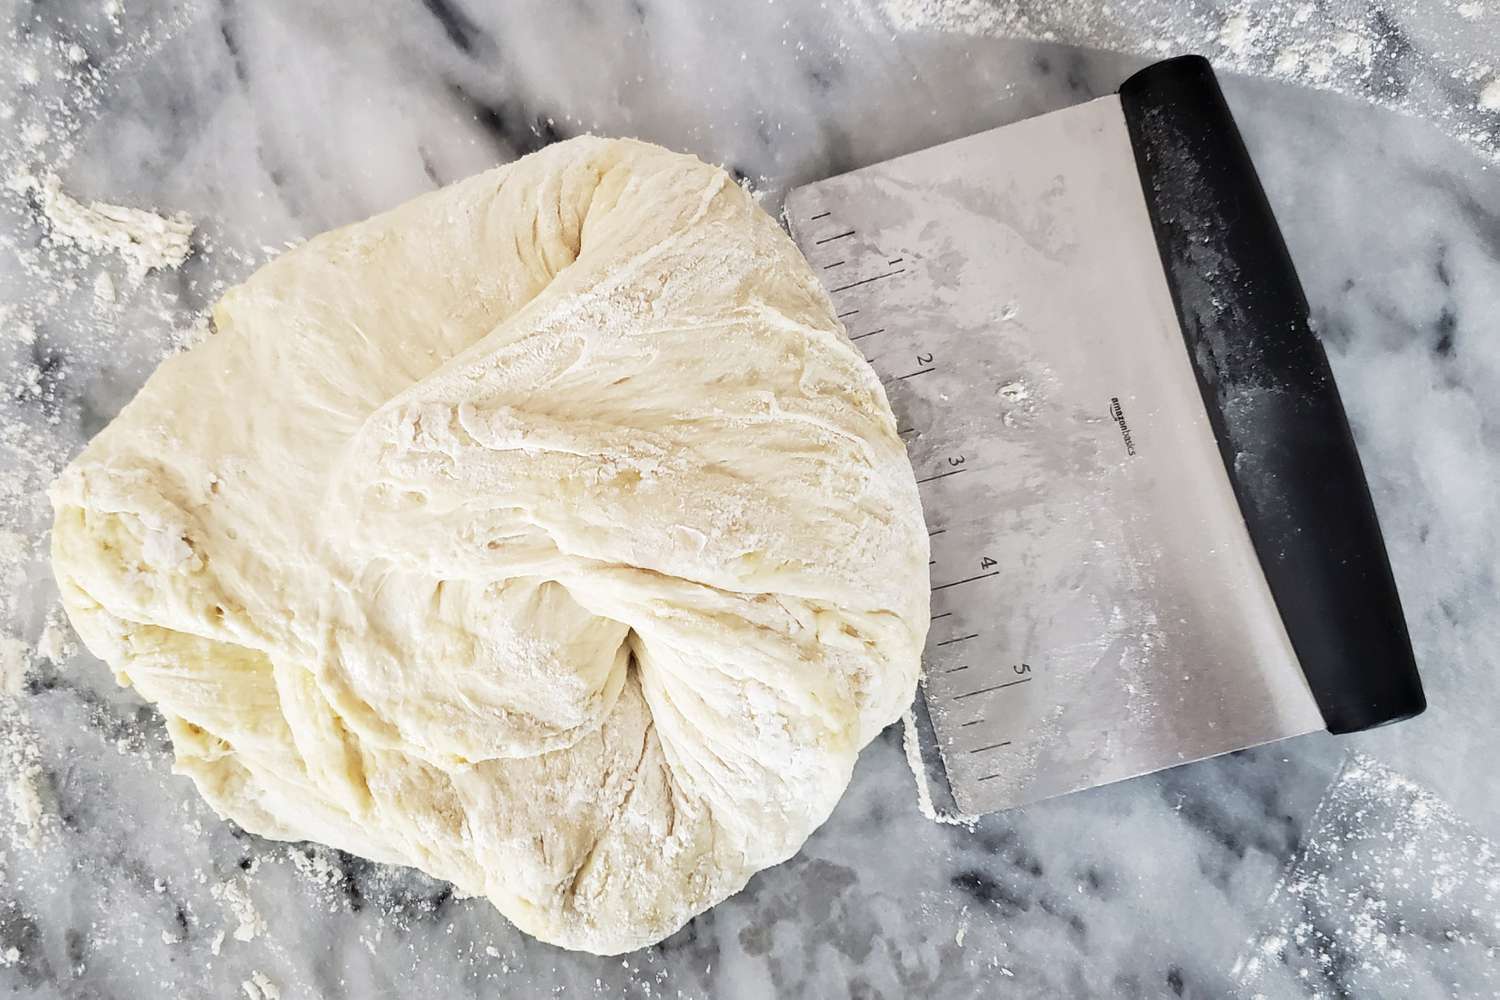 Shaping the bread dough for no-knead bread